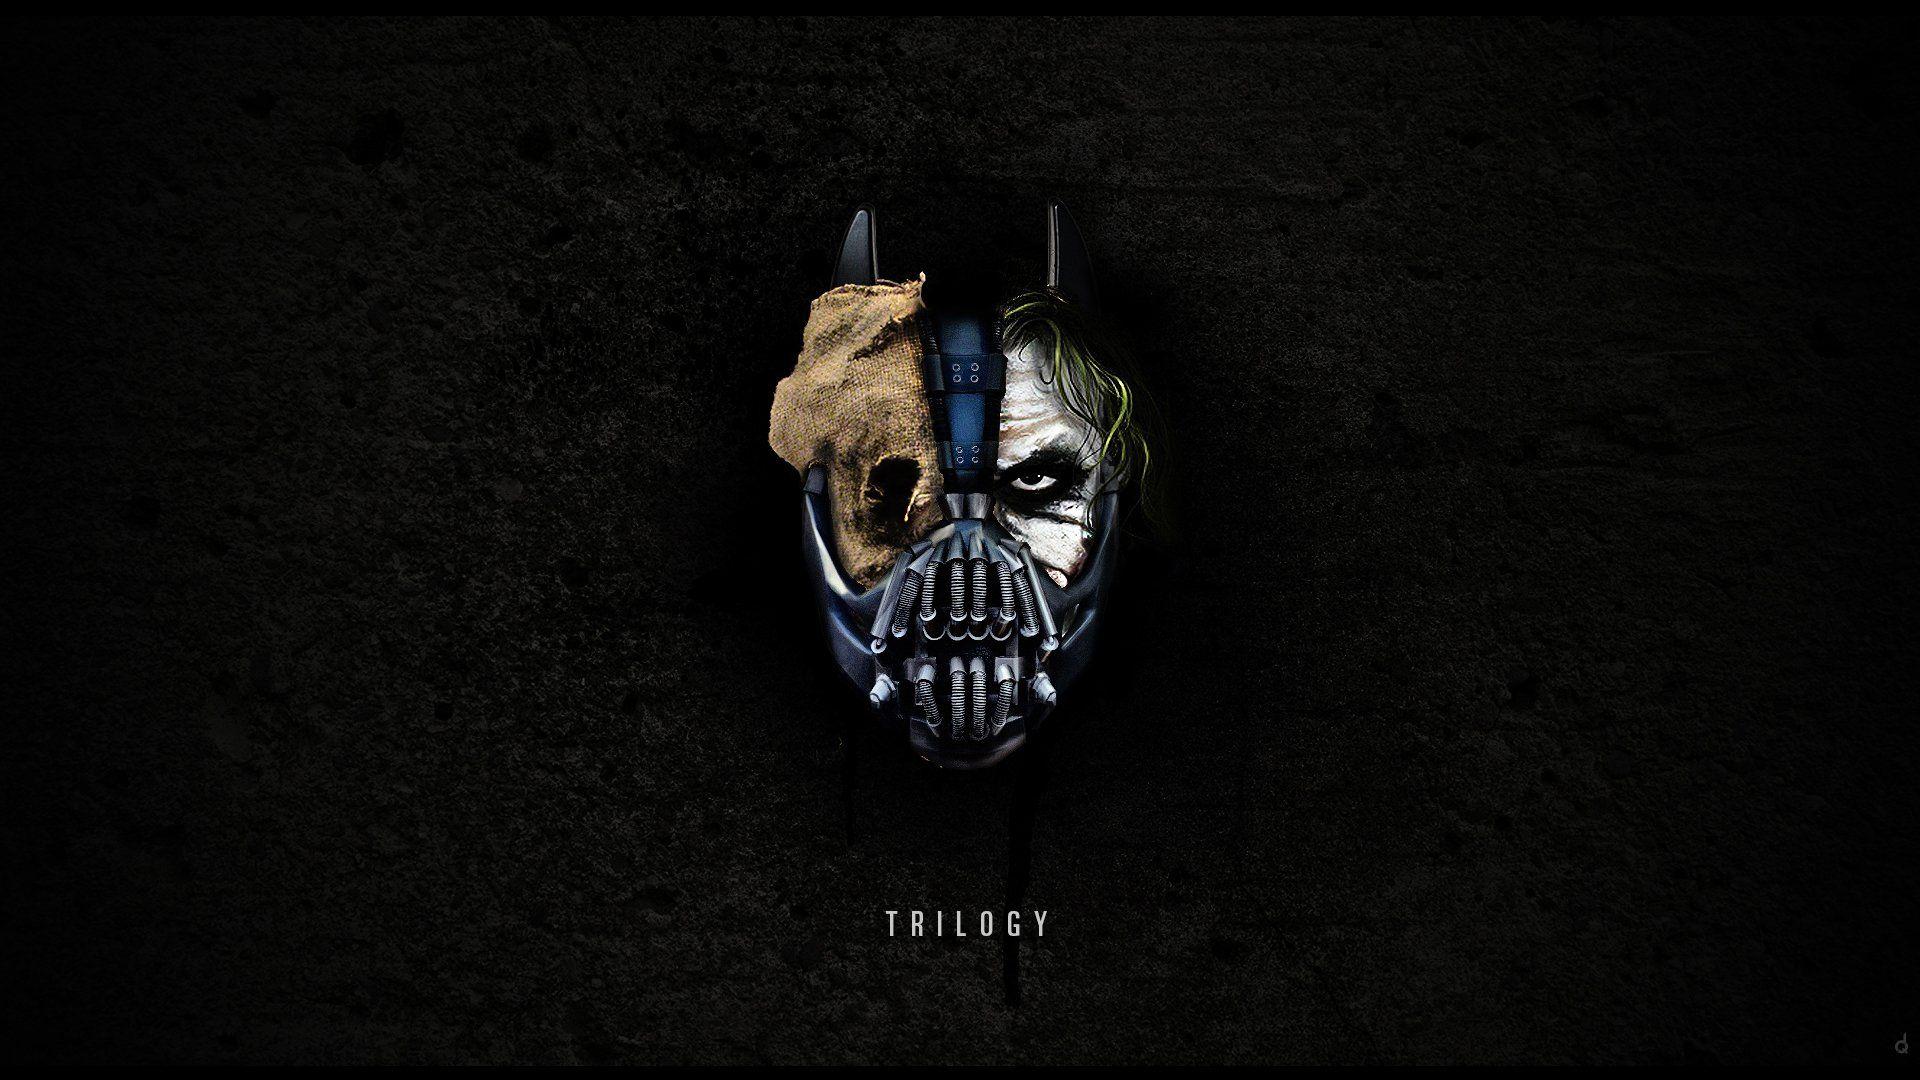 Batman HD Wallpaper and Background Image